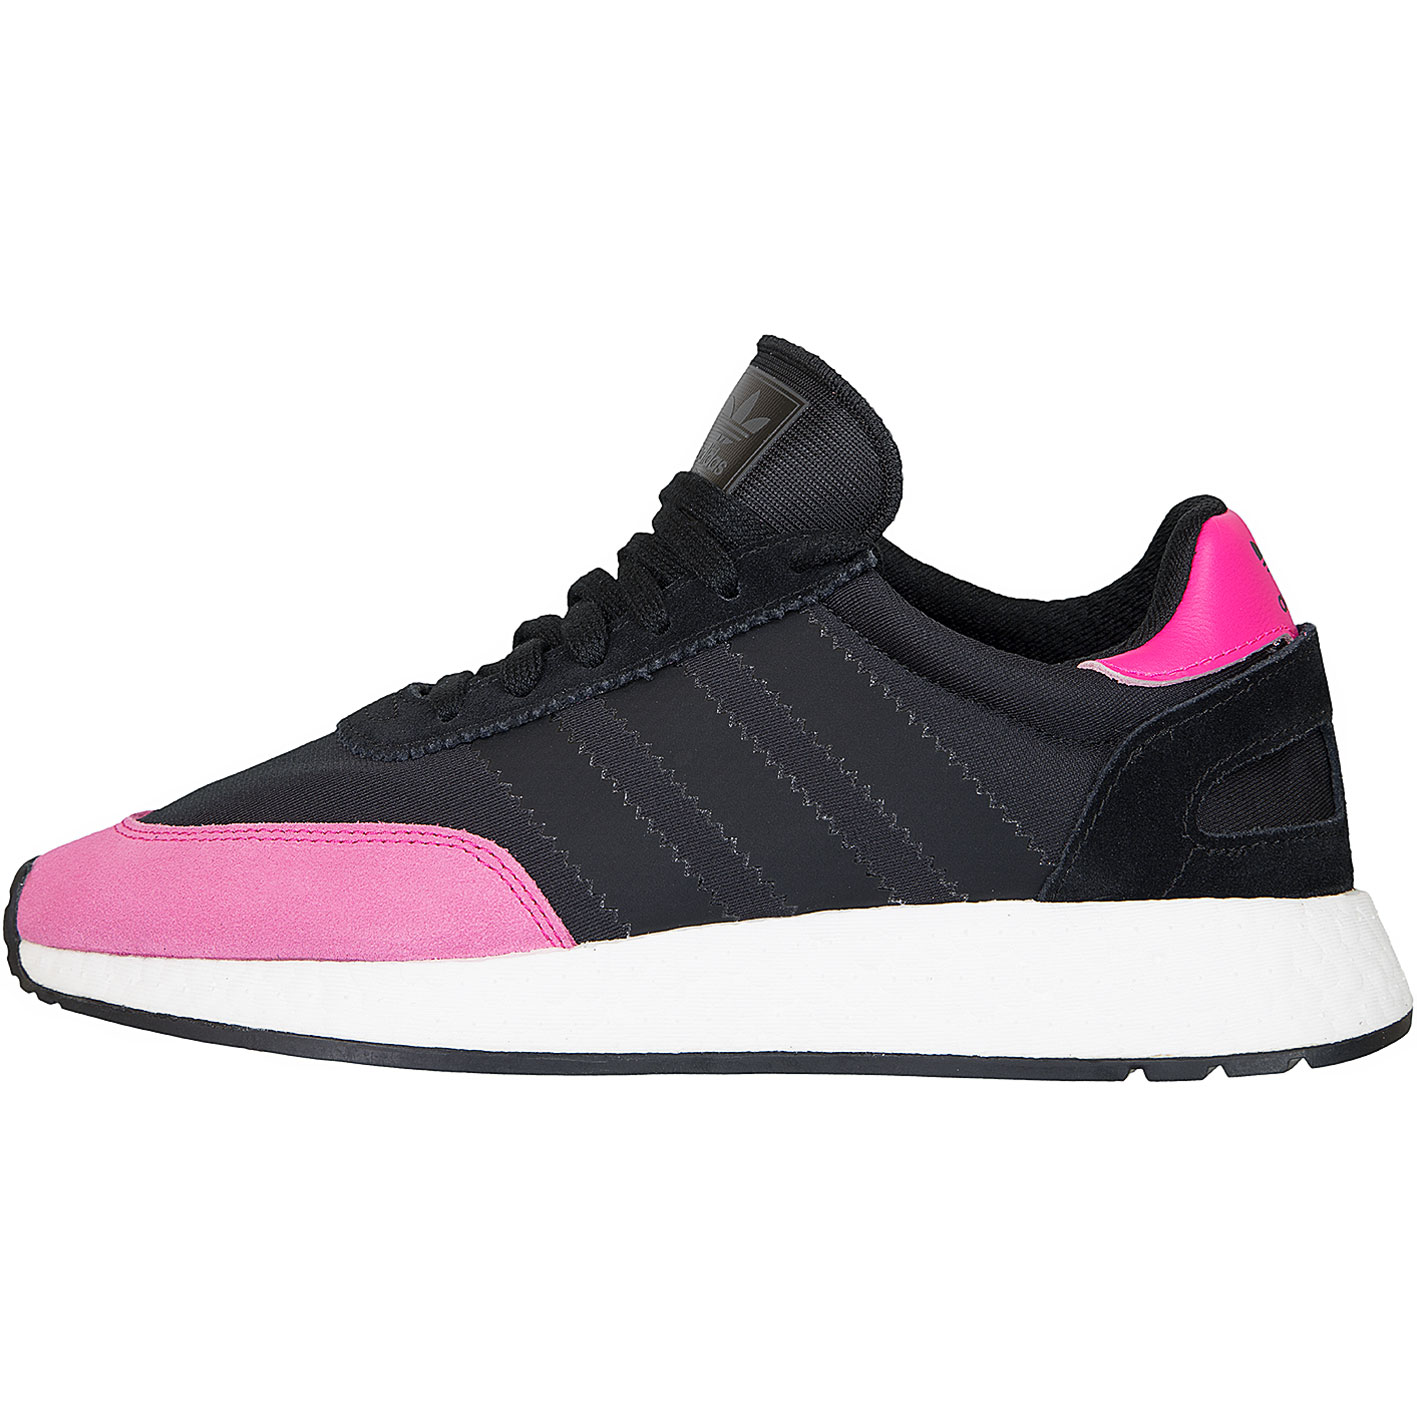 ☆ Adidas Originals Sneaker I-5923 schwarz/pink - hier bestellen!